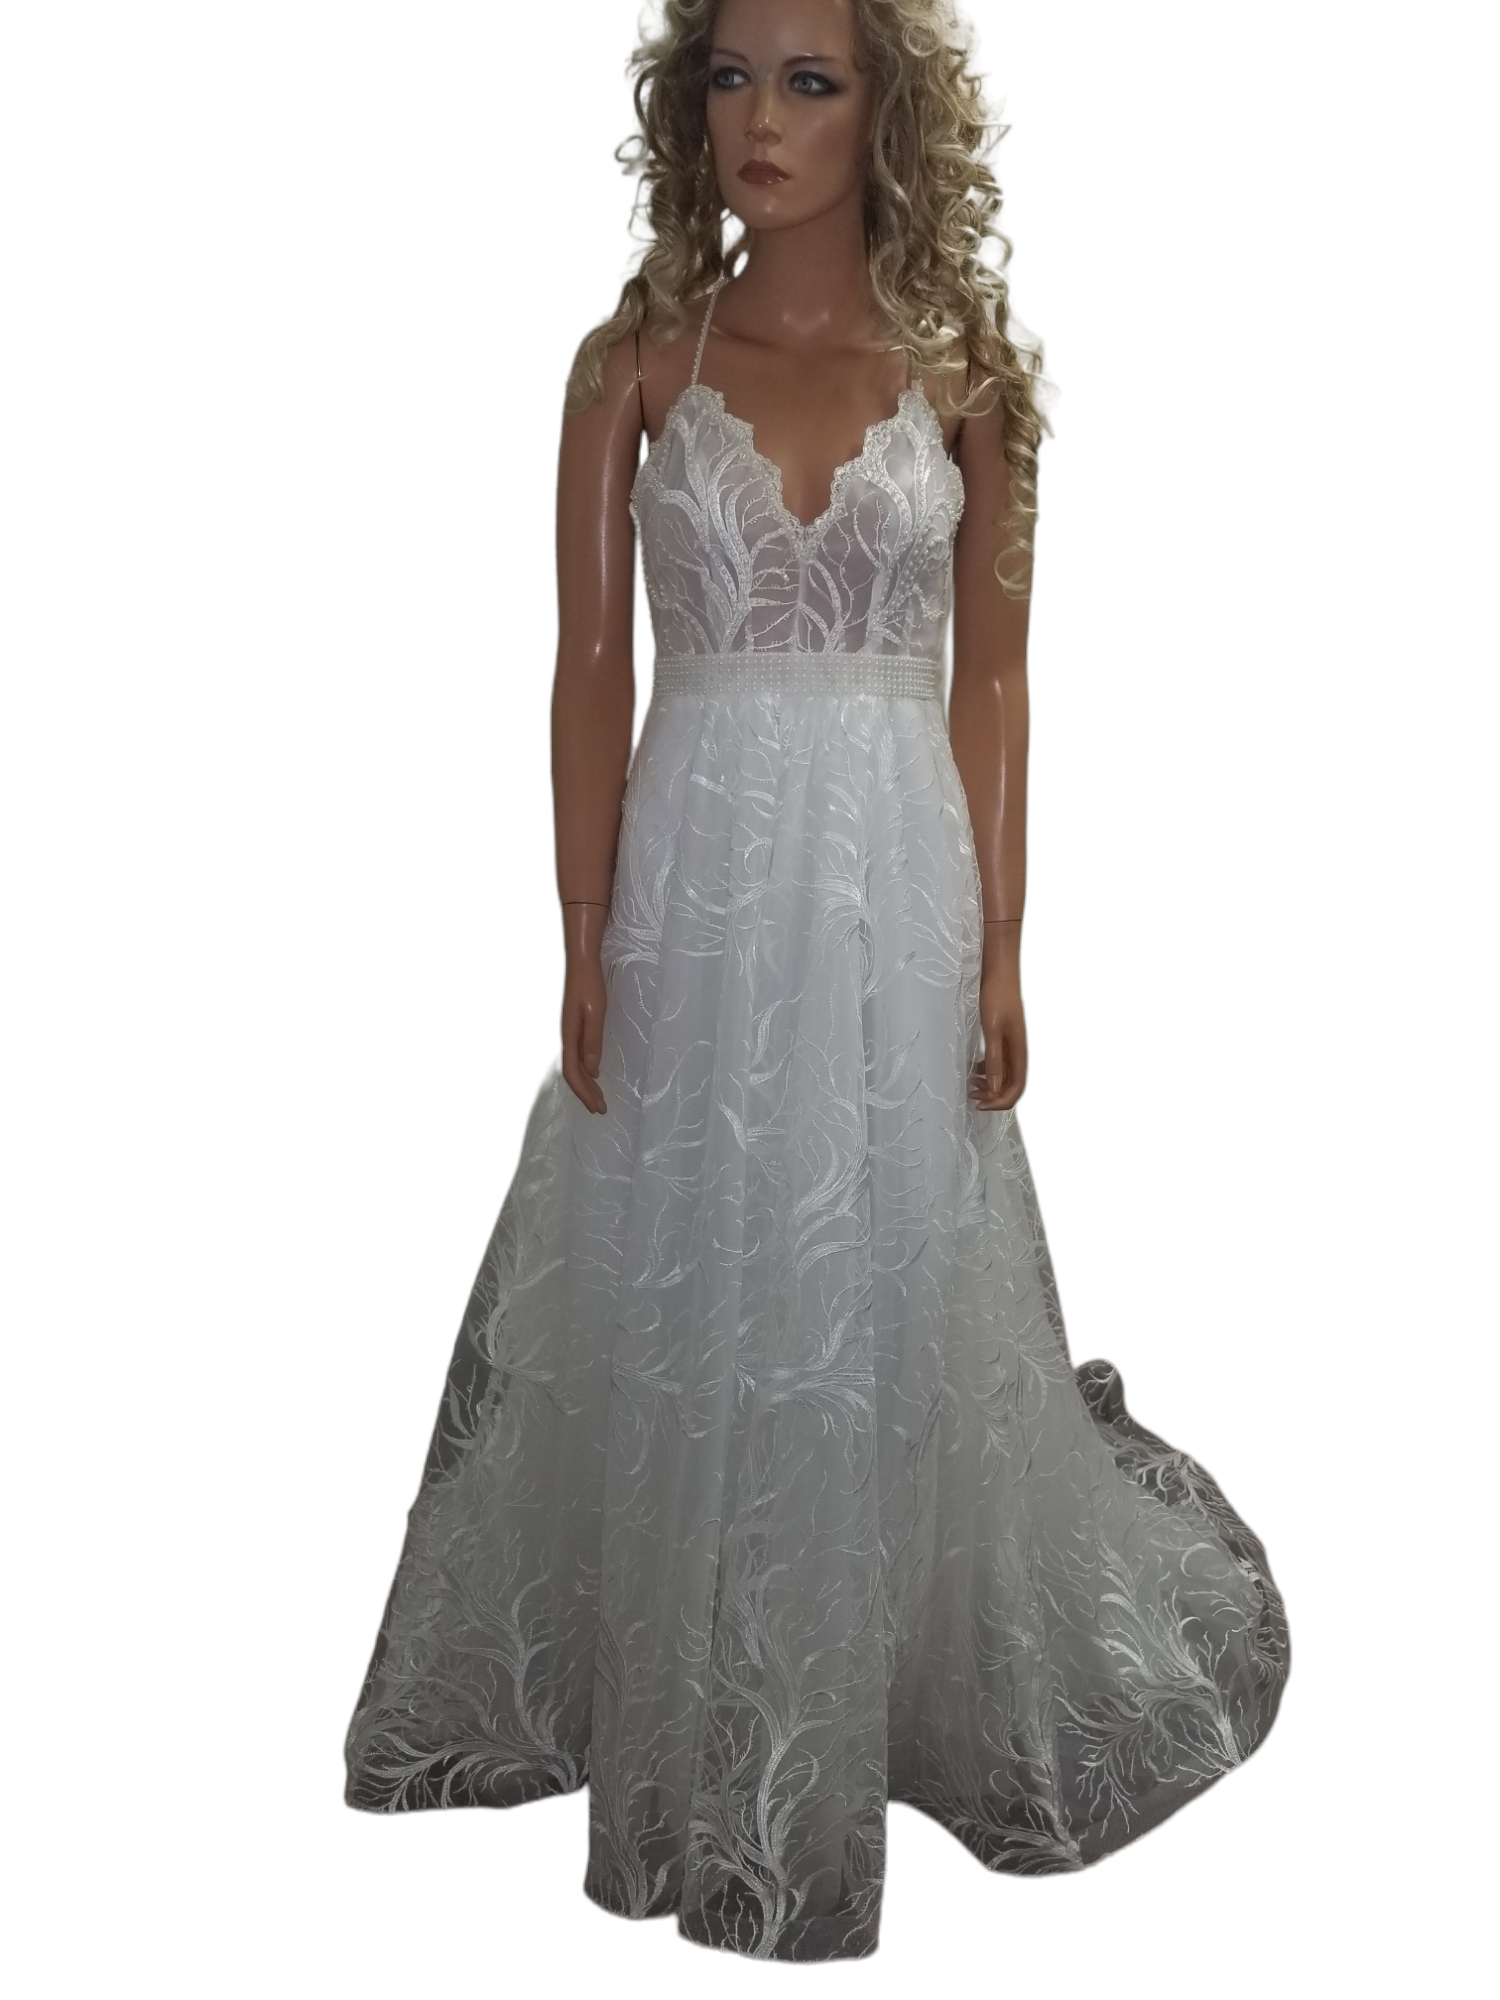 Wedding gown with textural vine design